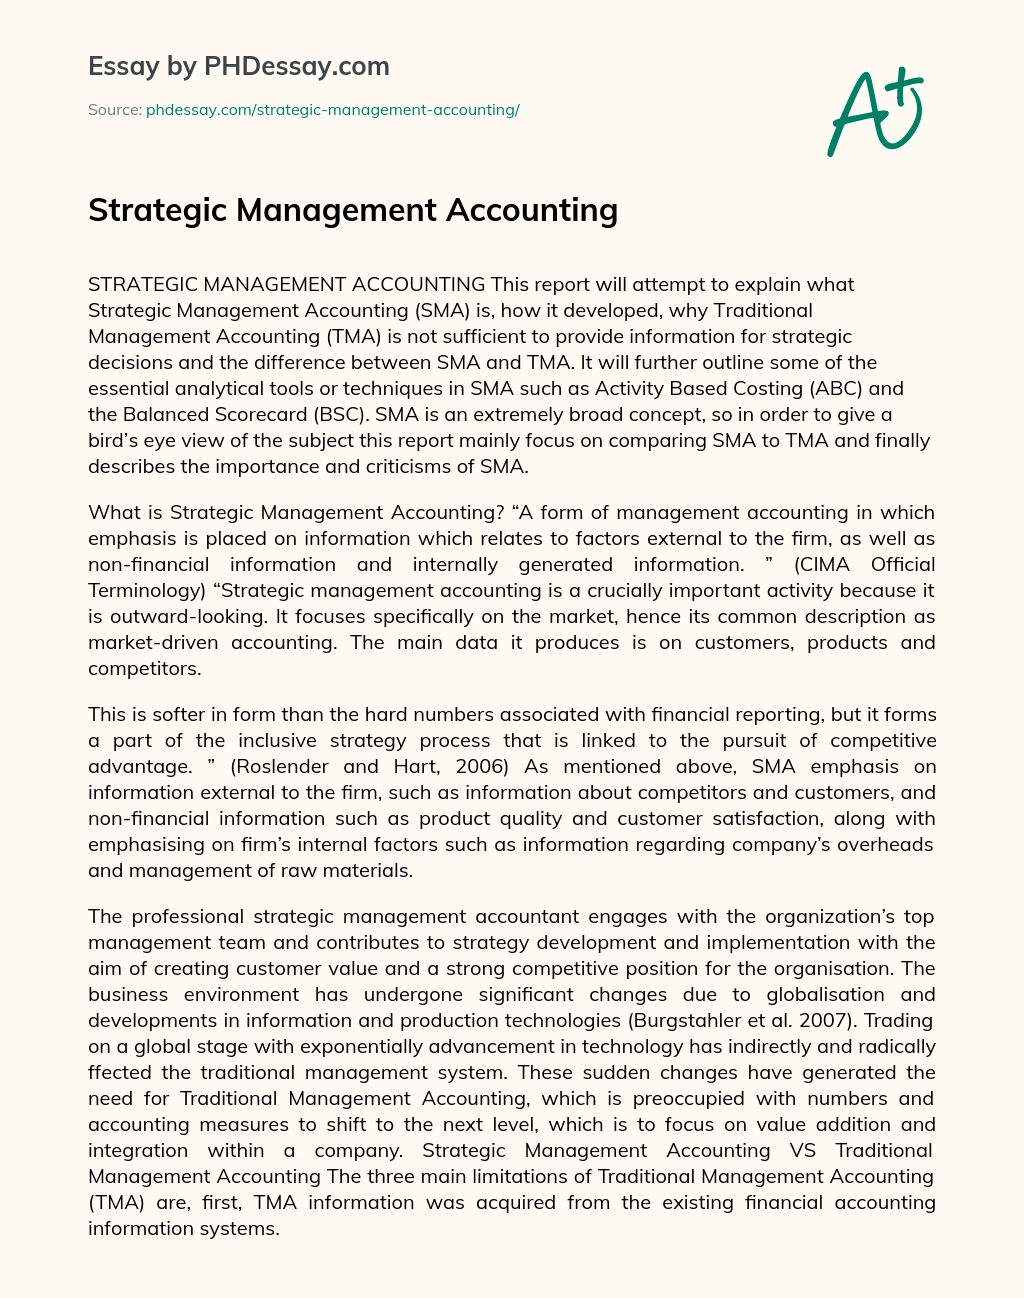 Strategic Management Accounting essay